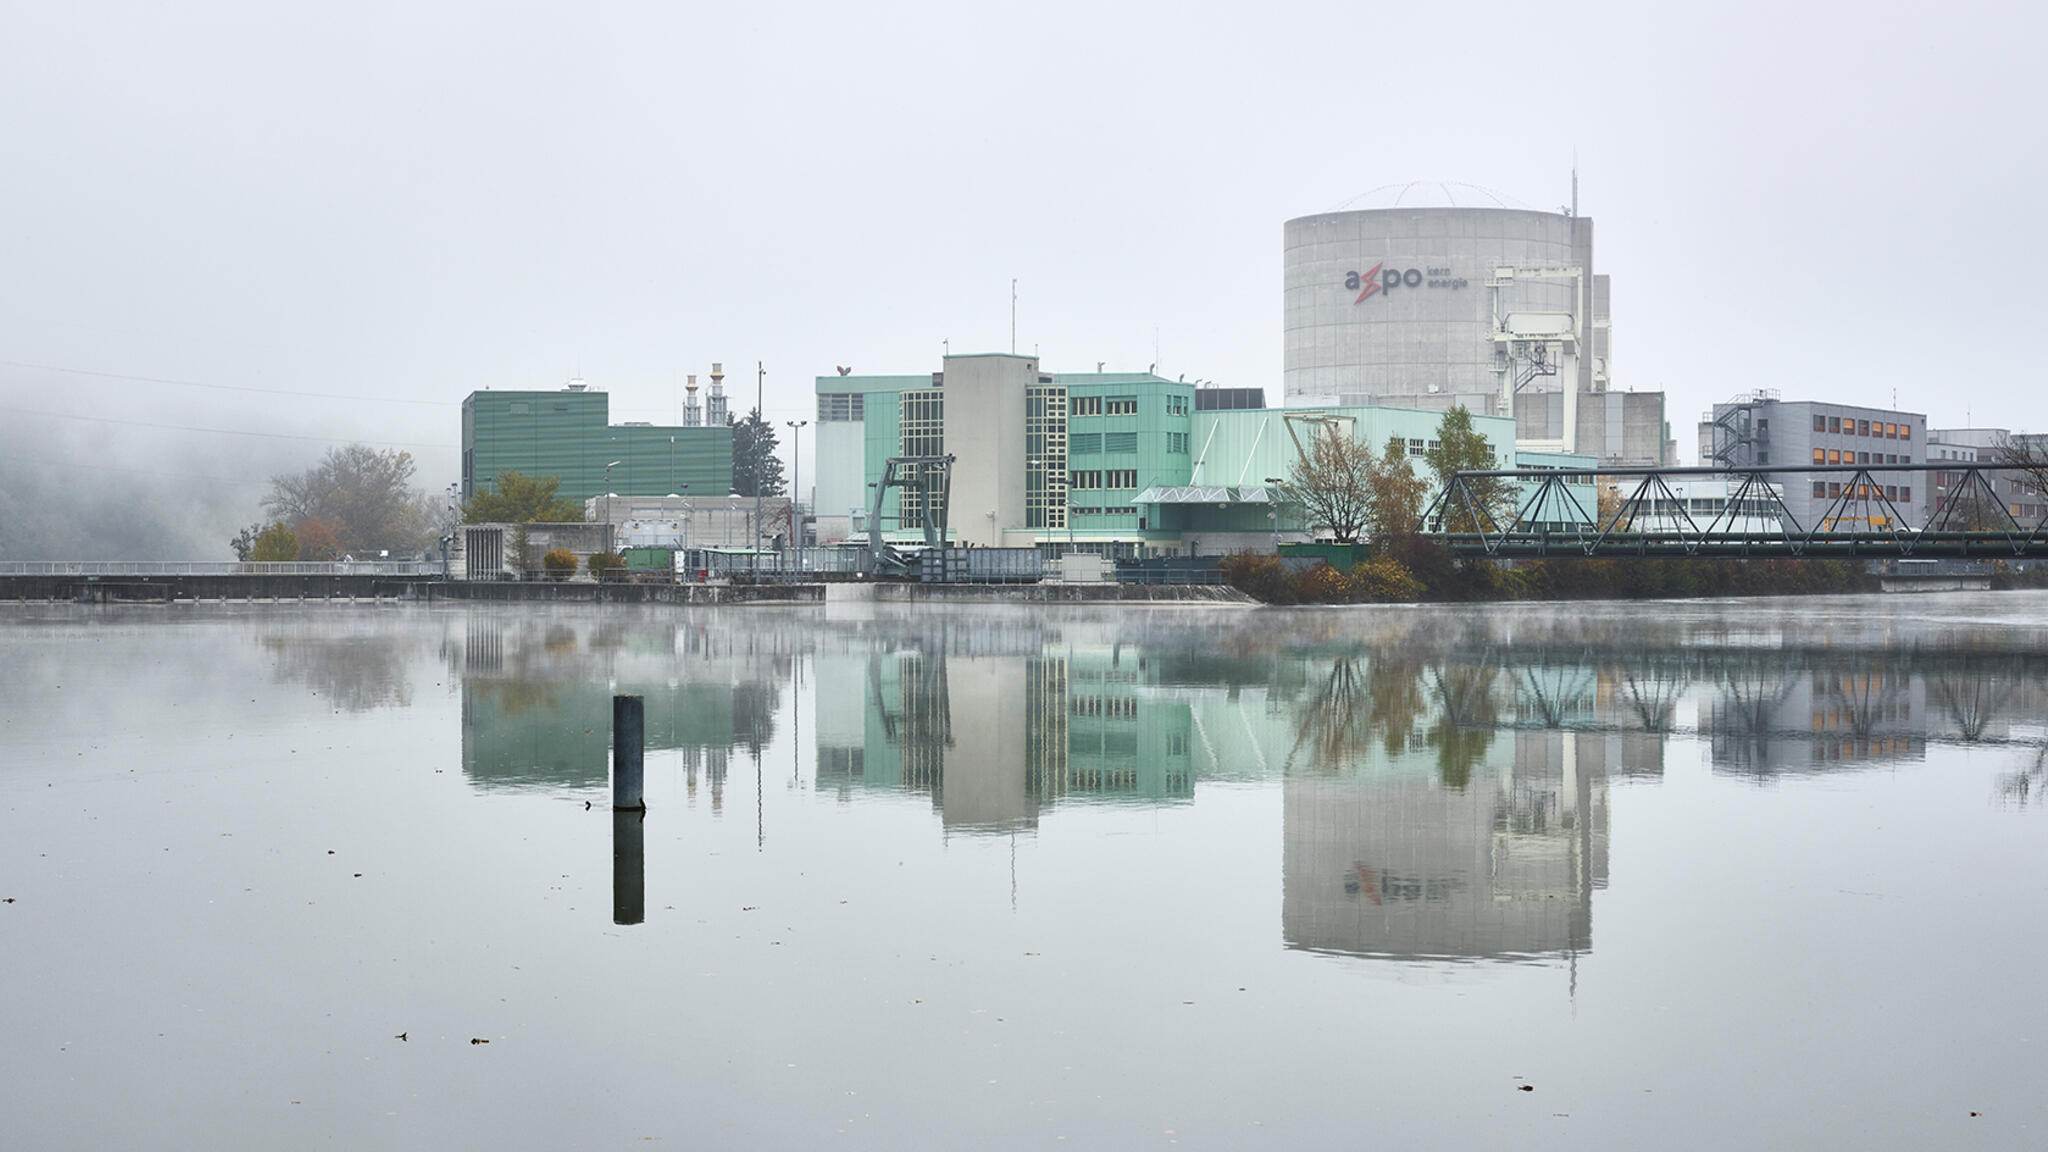 Atomkraftwerk Beznau